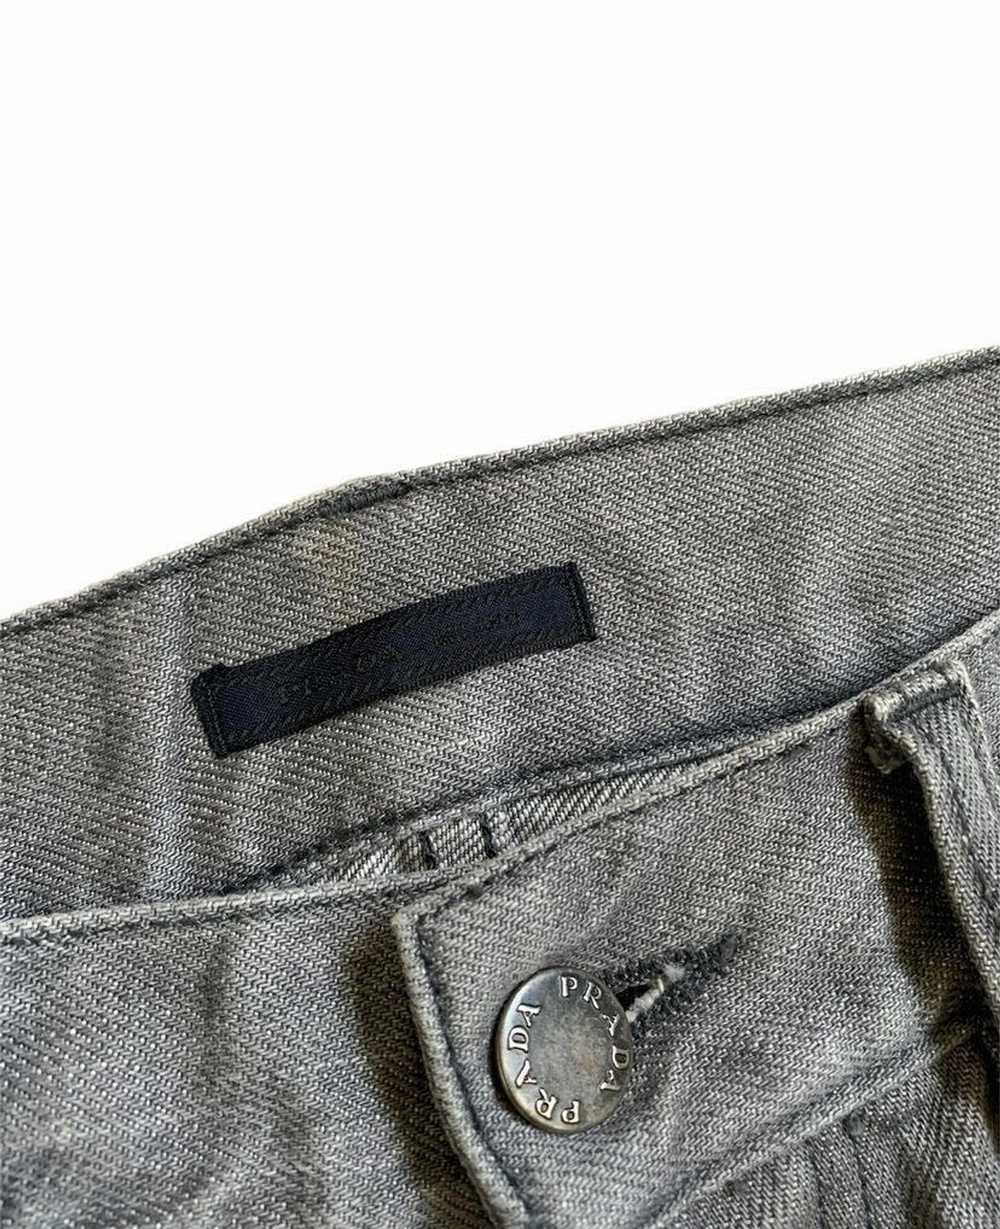 Prada Prada Milano Denim Jeans - image 3